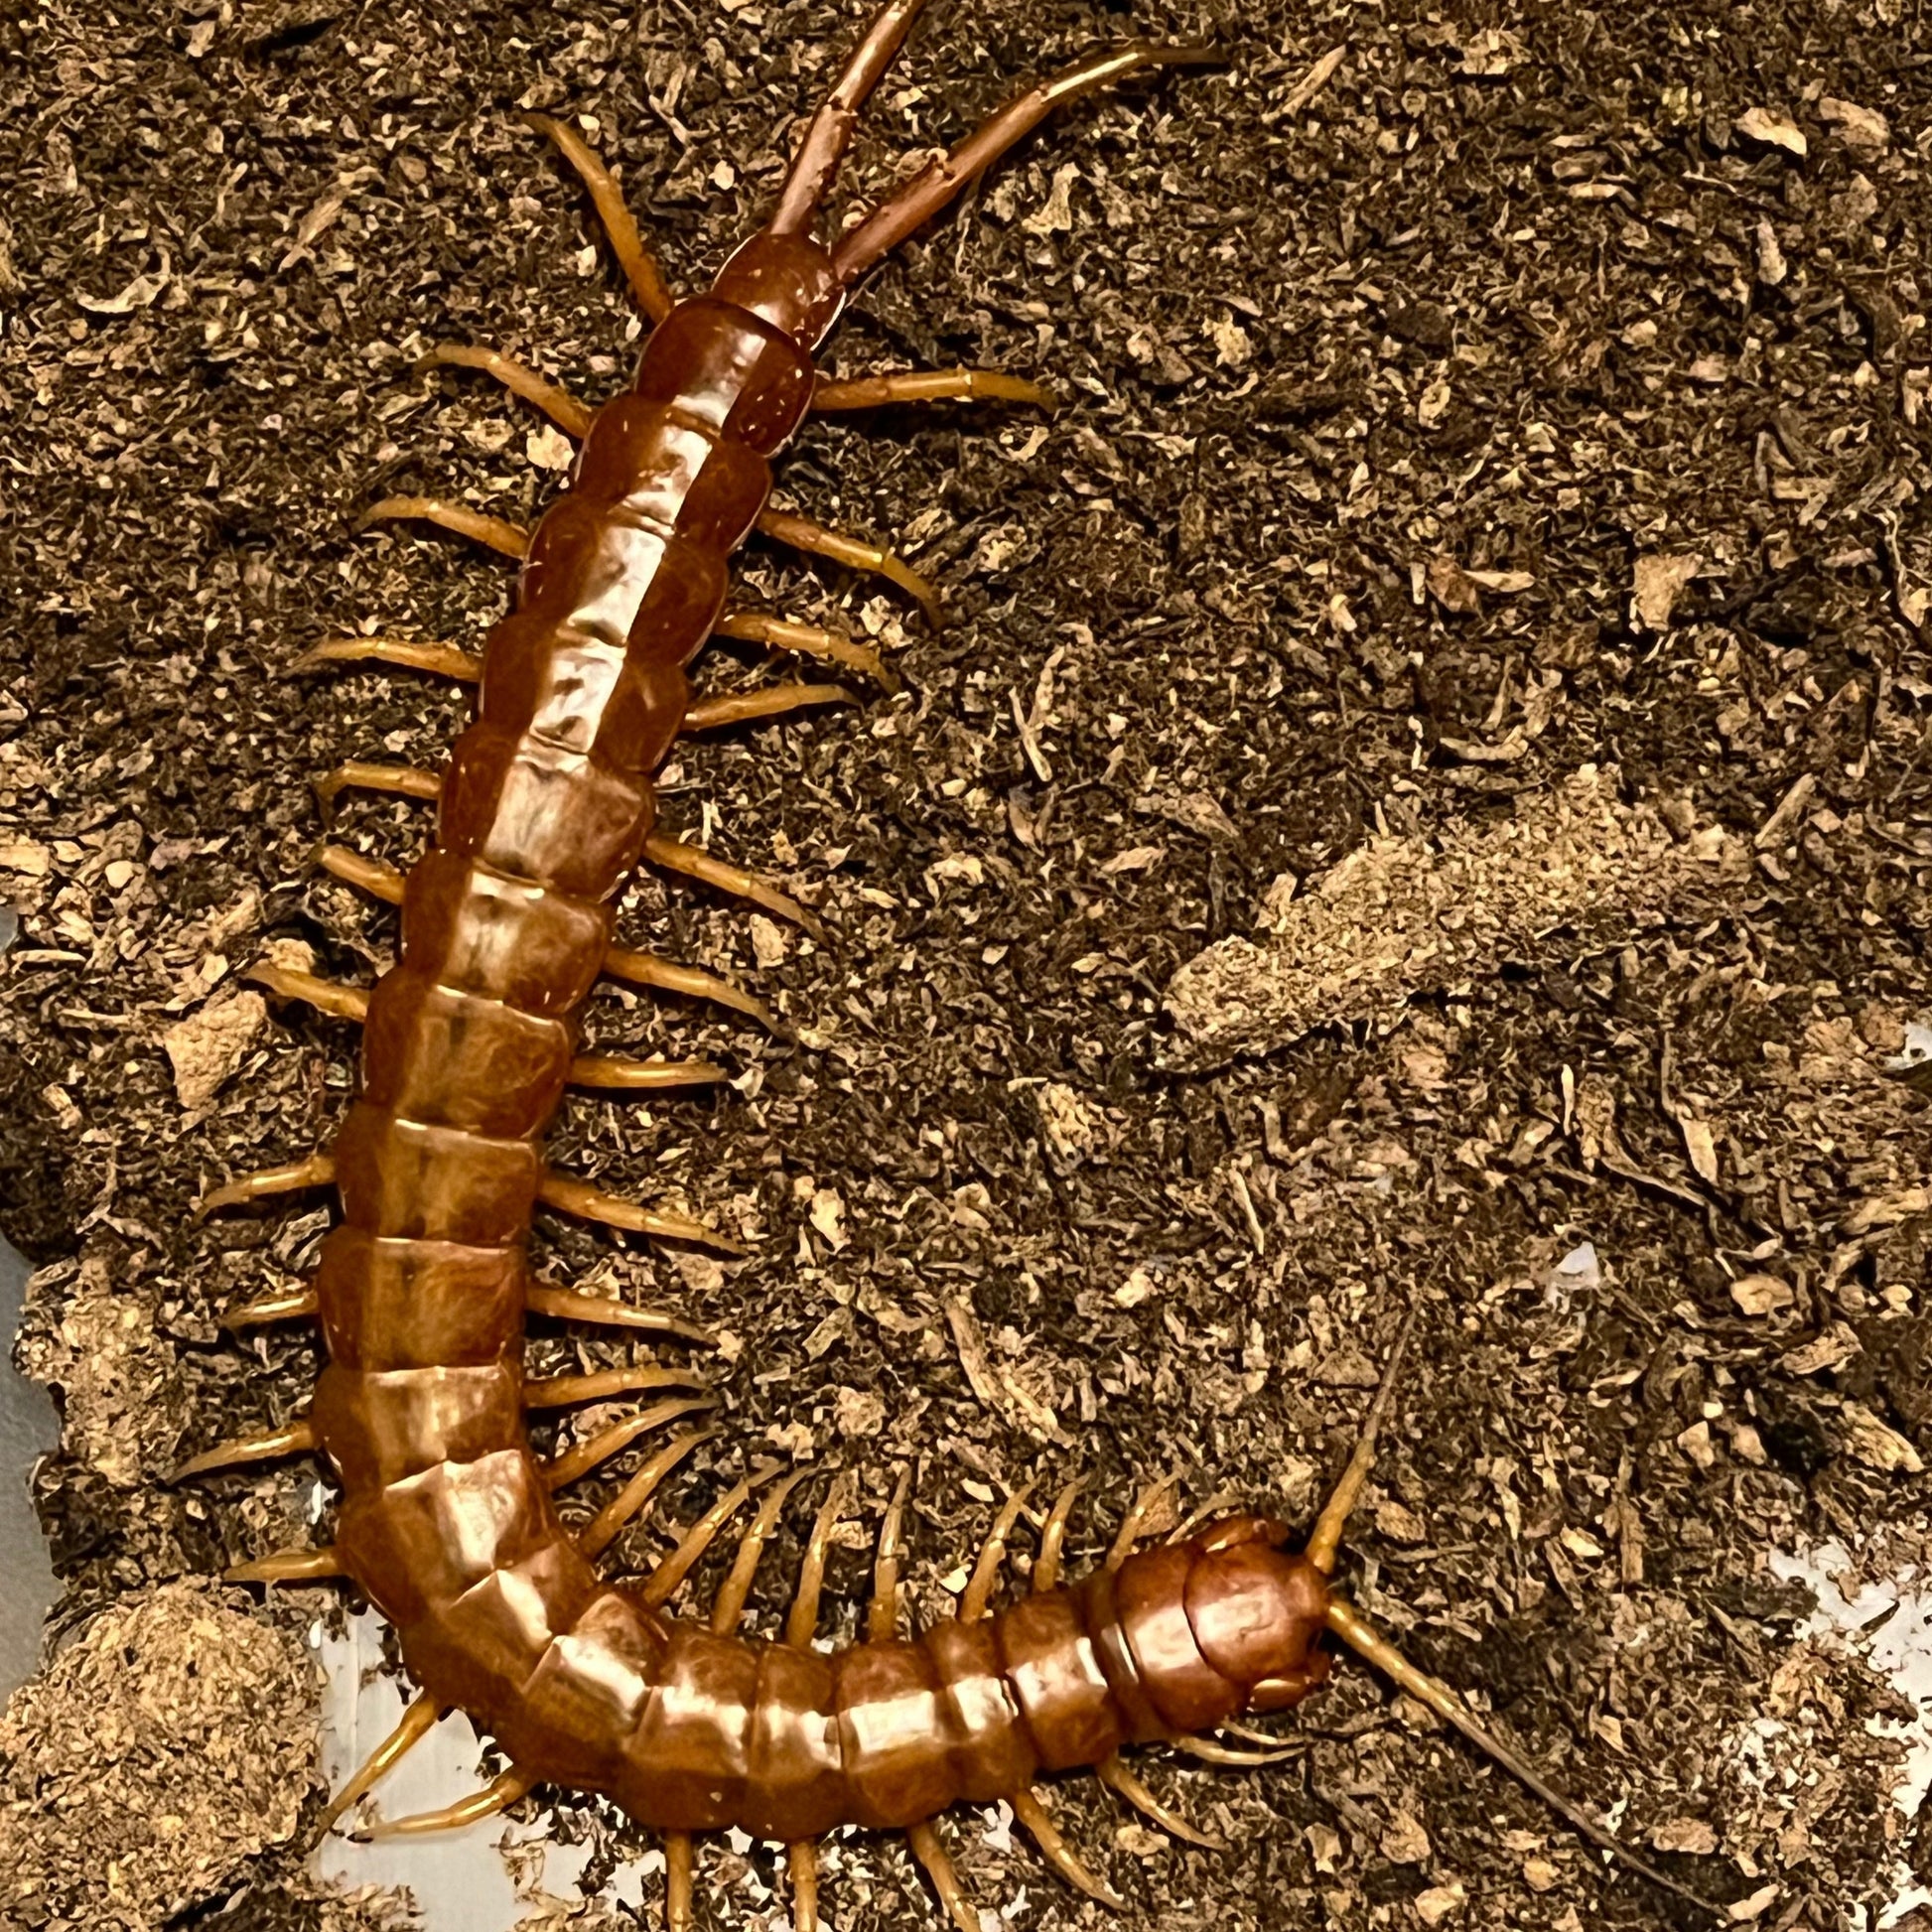 Florida keys giant centipede